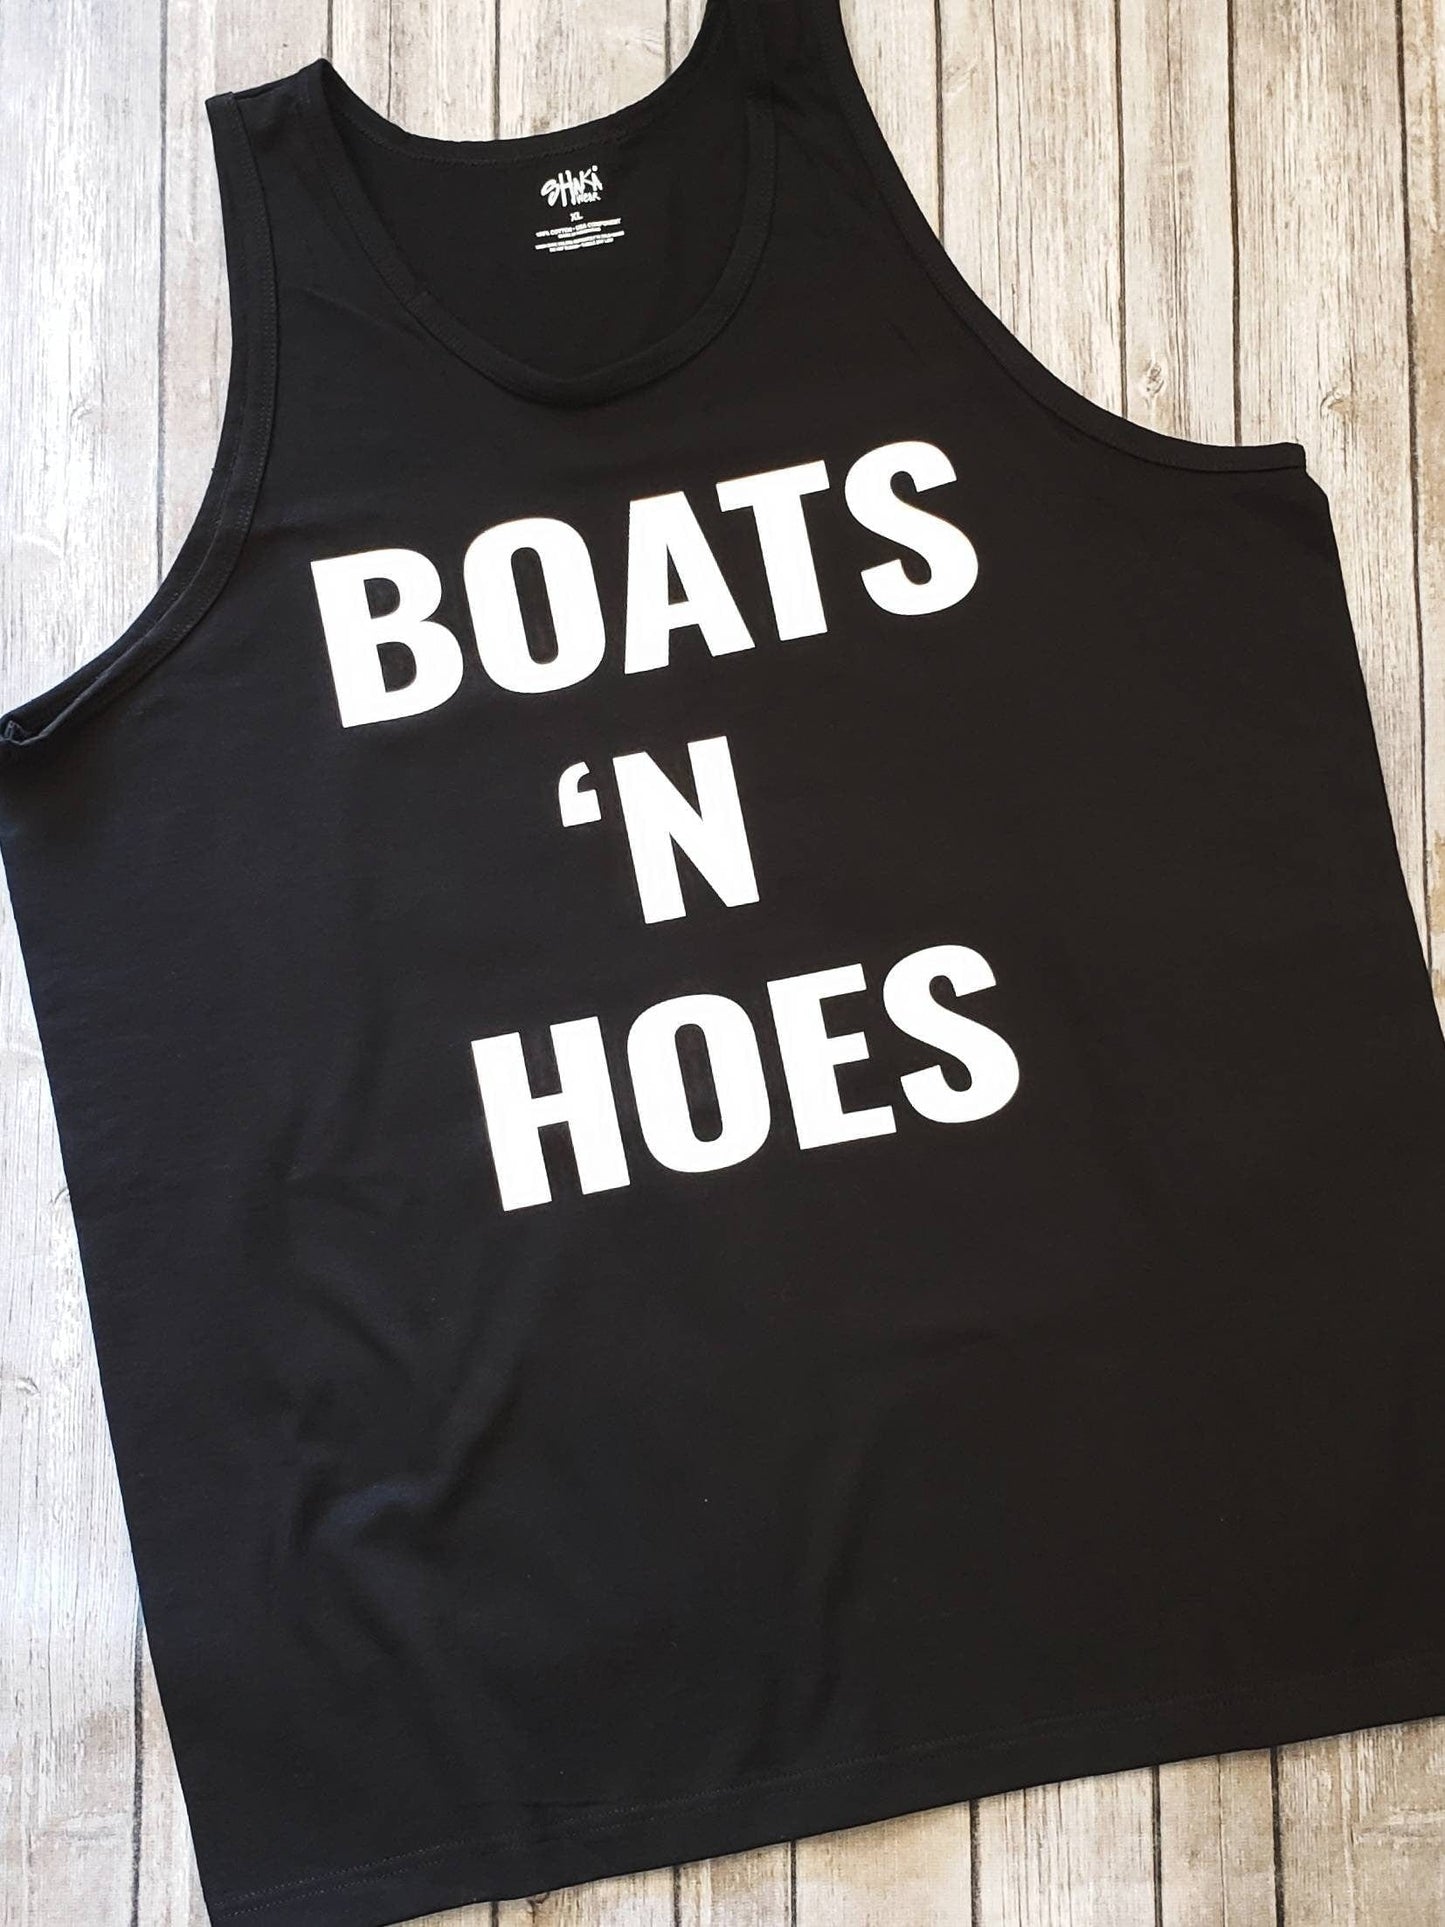 Boats N Hoes Men's Black Tank Top Shelton Shirts